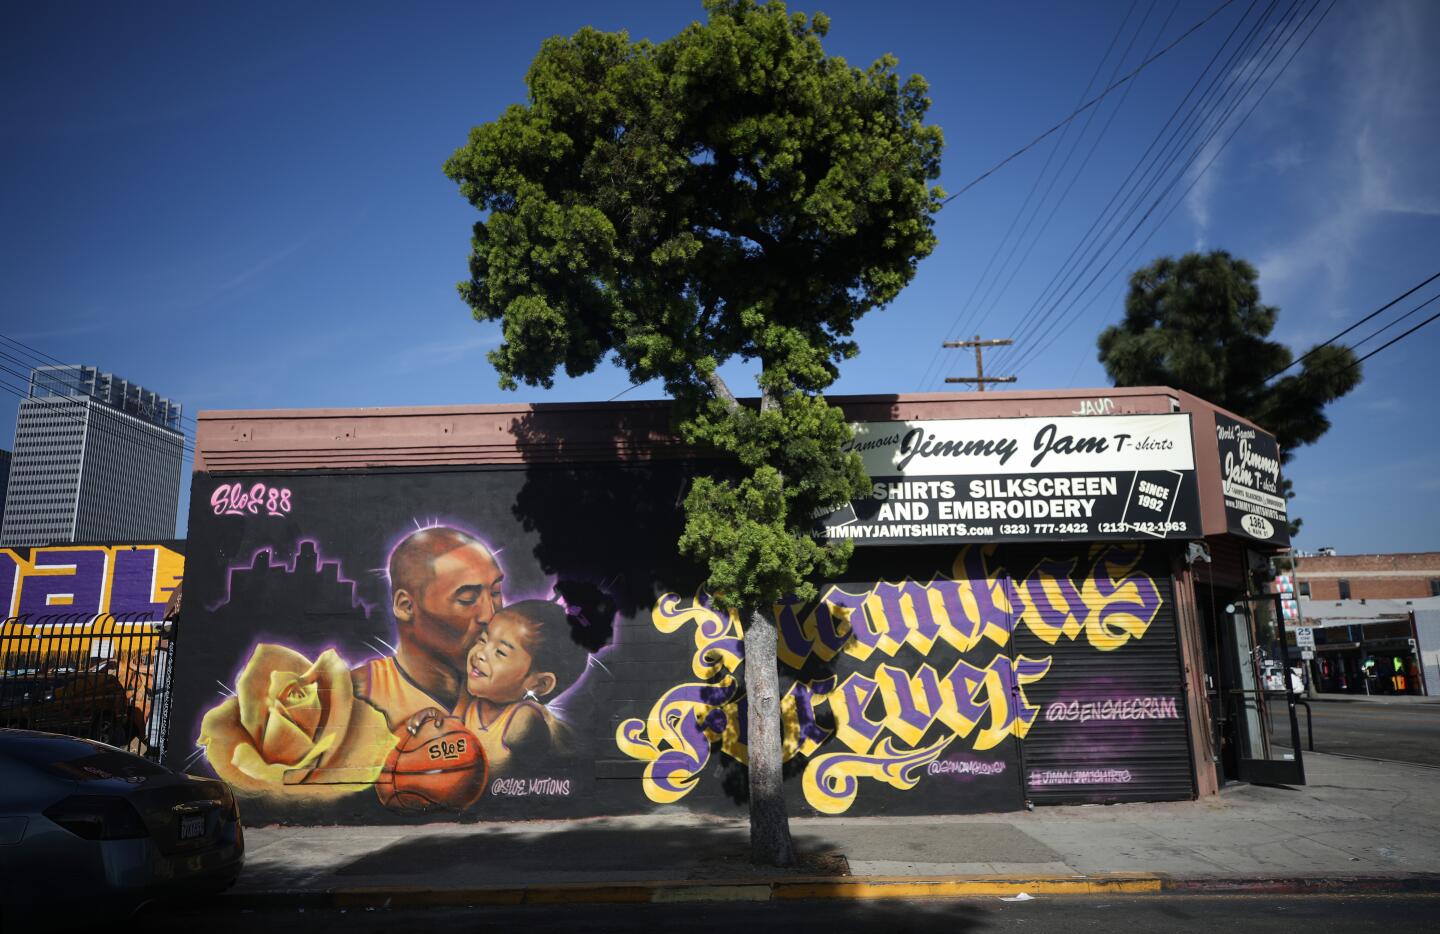 Los Angeles Lakers Legend Kobe Bryant Memorialized Across L.A. In Murals